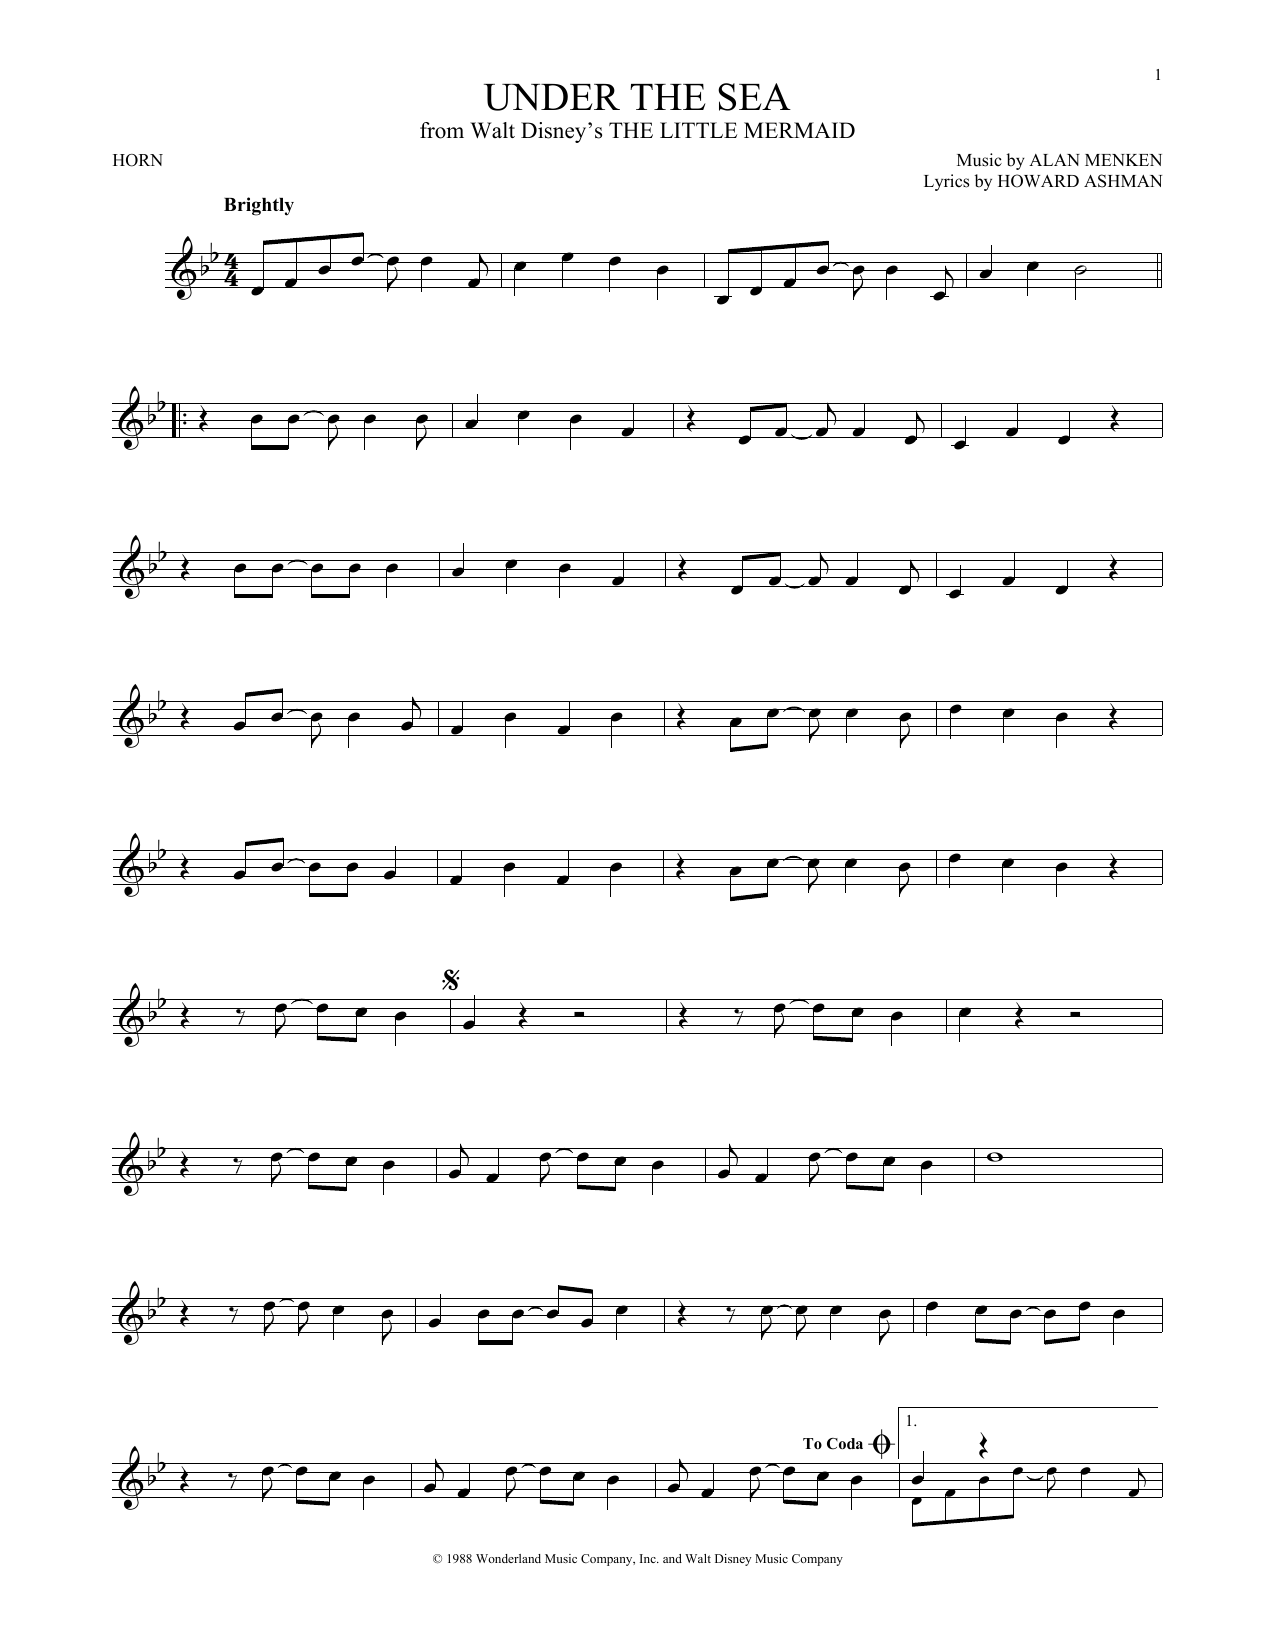 Alan Menken & Howard Ashman Under The Sea Sheet Music Notes & Chords for Clarinet - Download or Print PDF